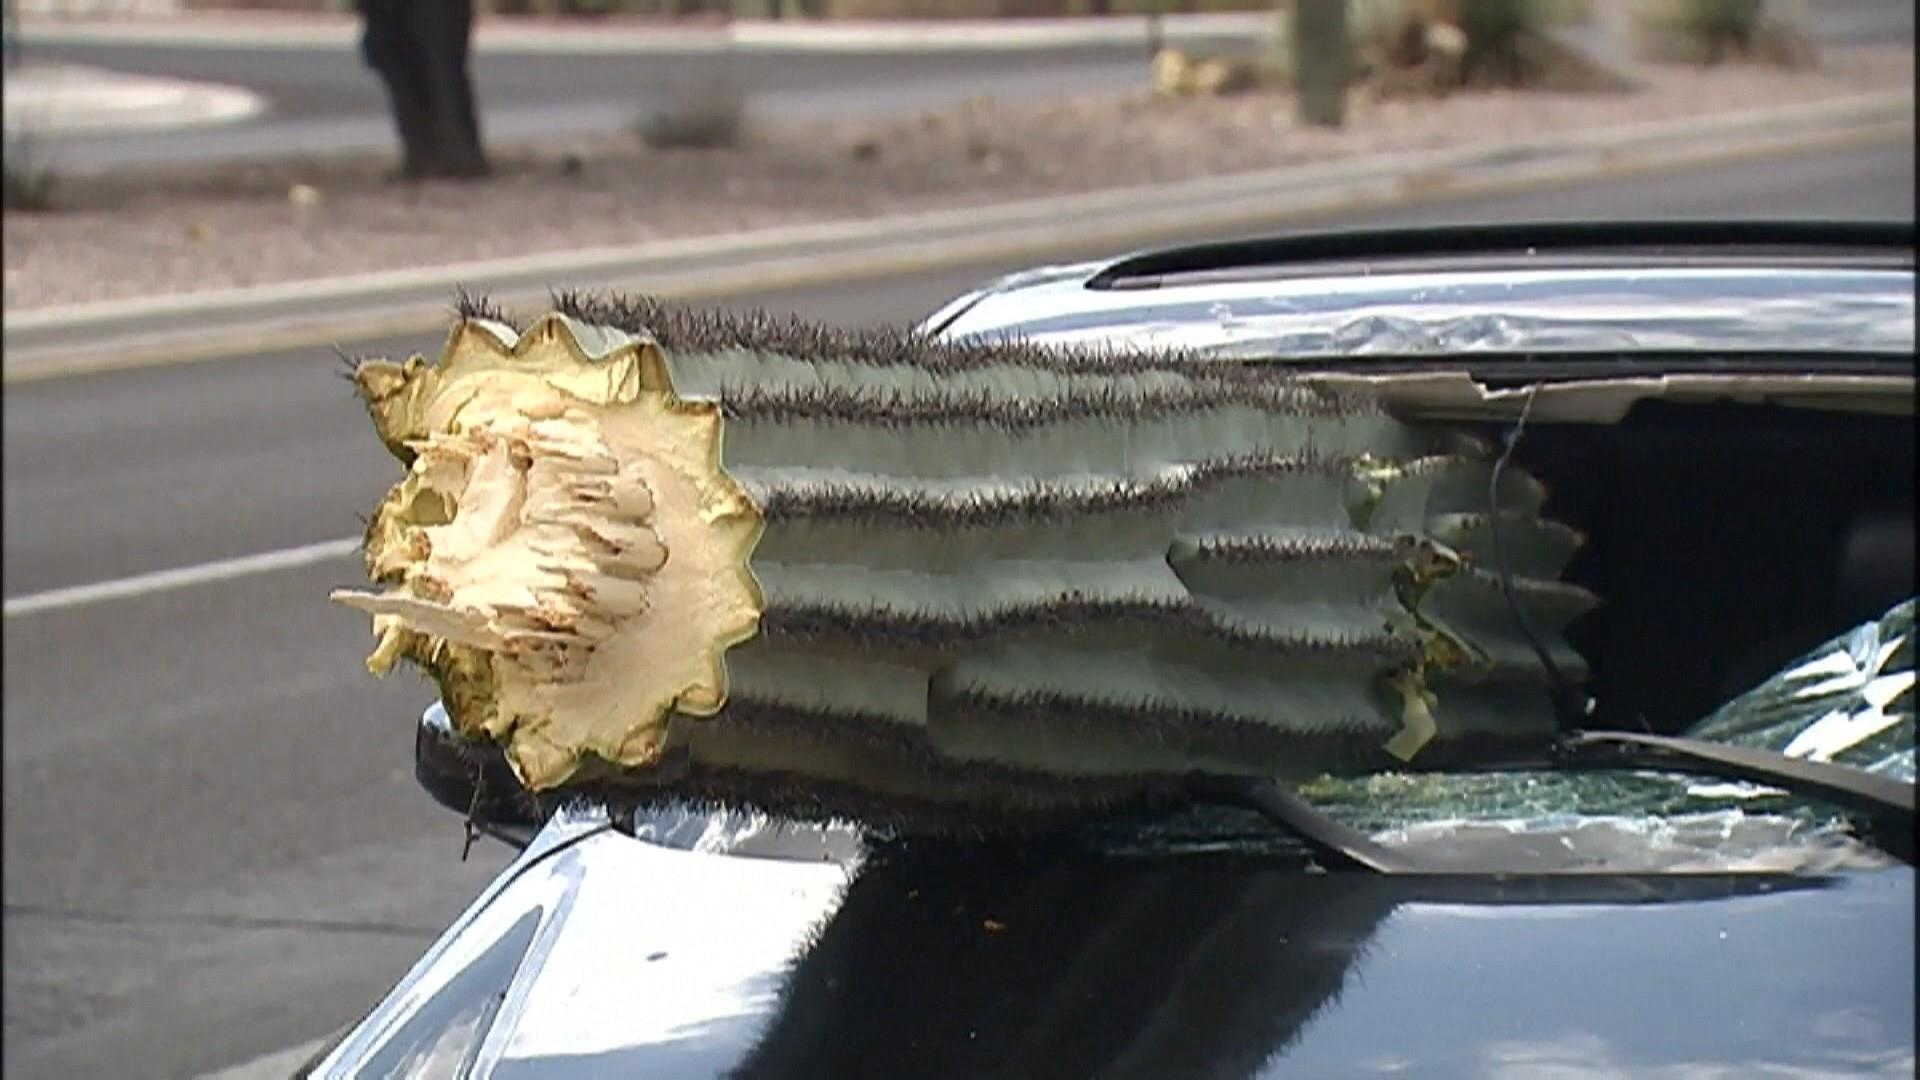  Desert Cactus University of Louisiana Lafayette Car